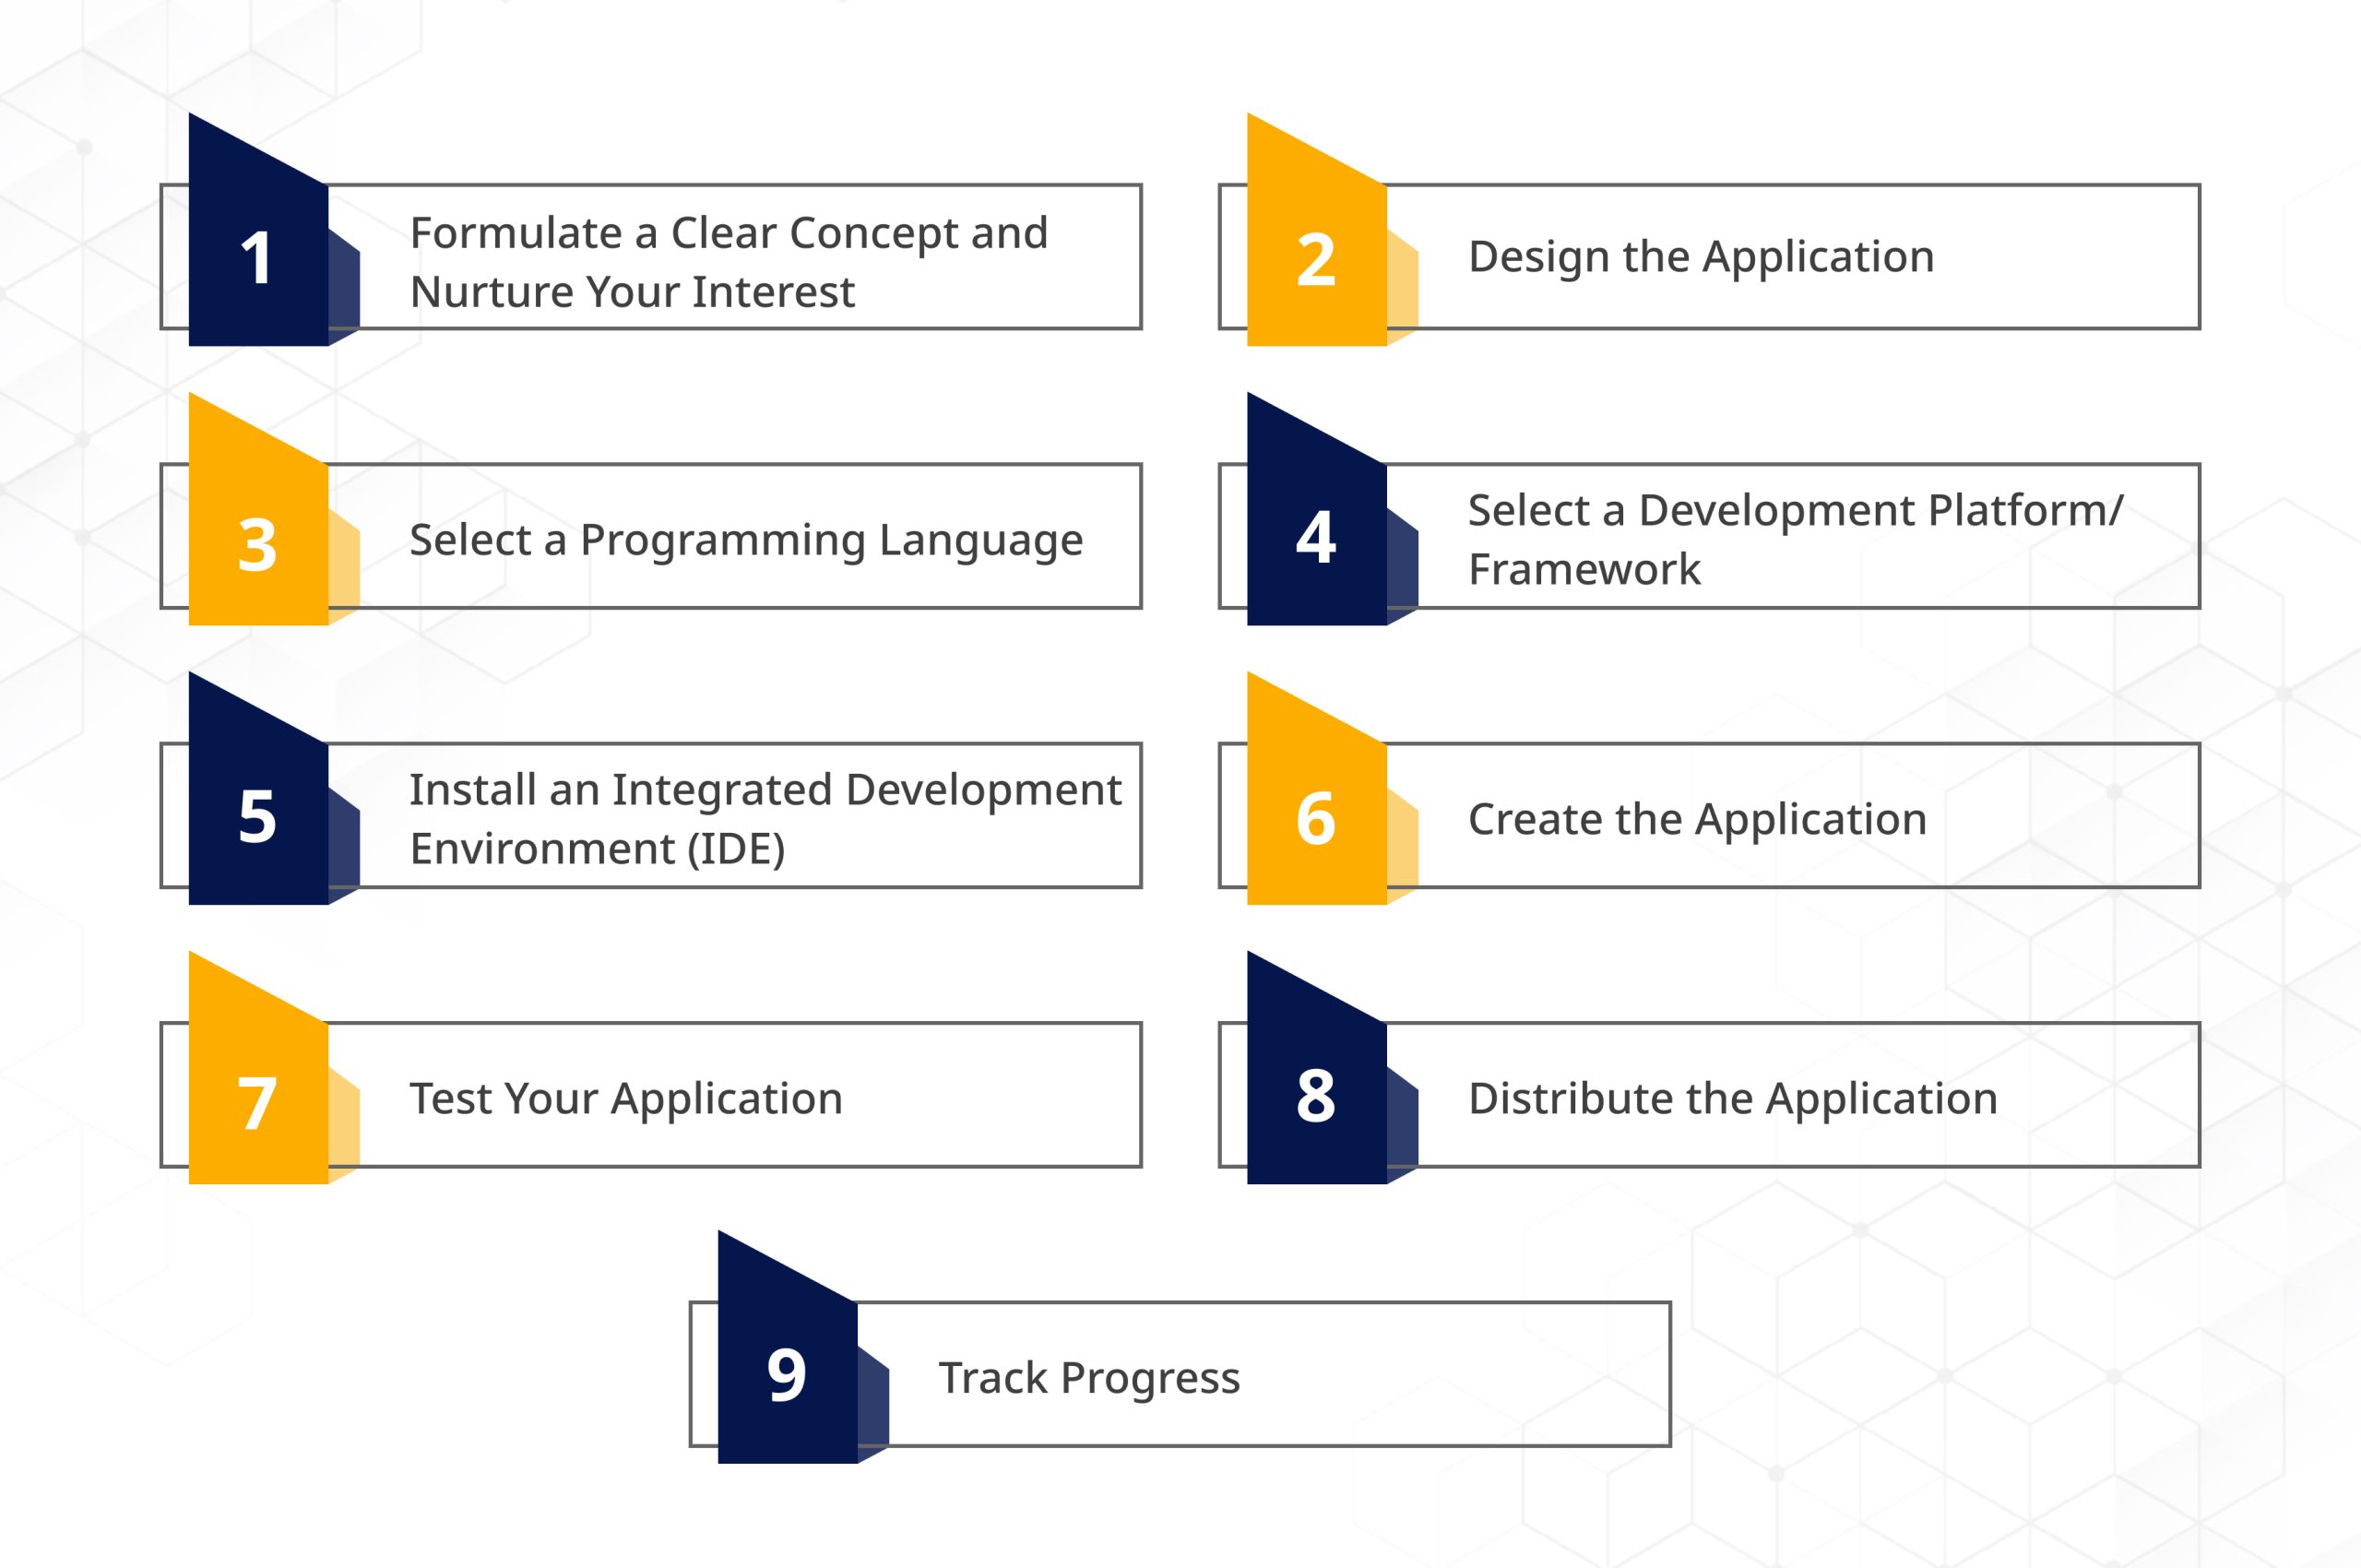 Steps for Developing Desktop Applications